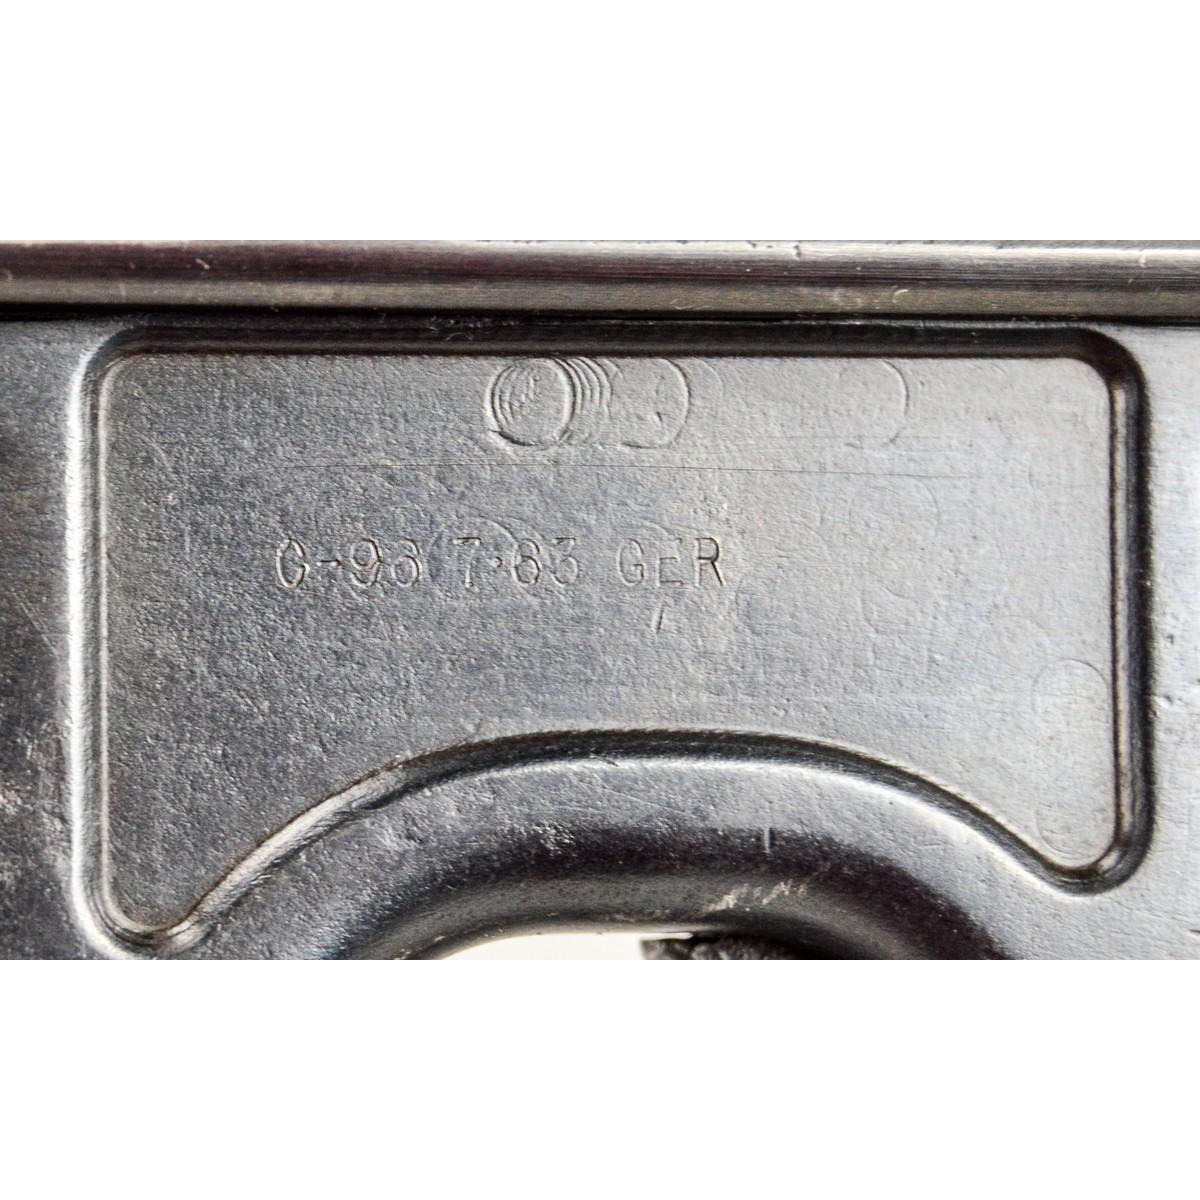 Mauser Broomhandle C-96 9mm Pistol